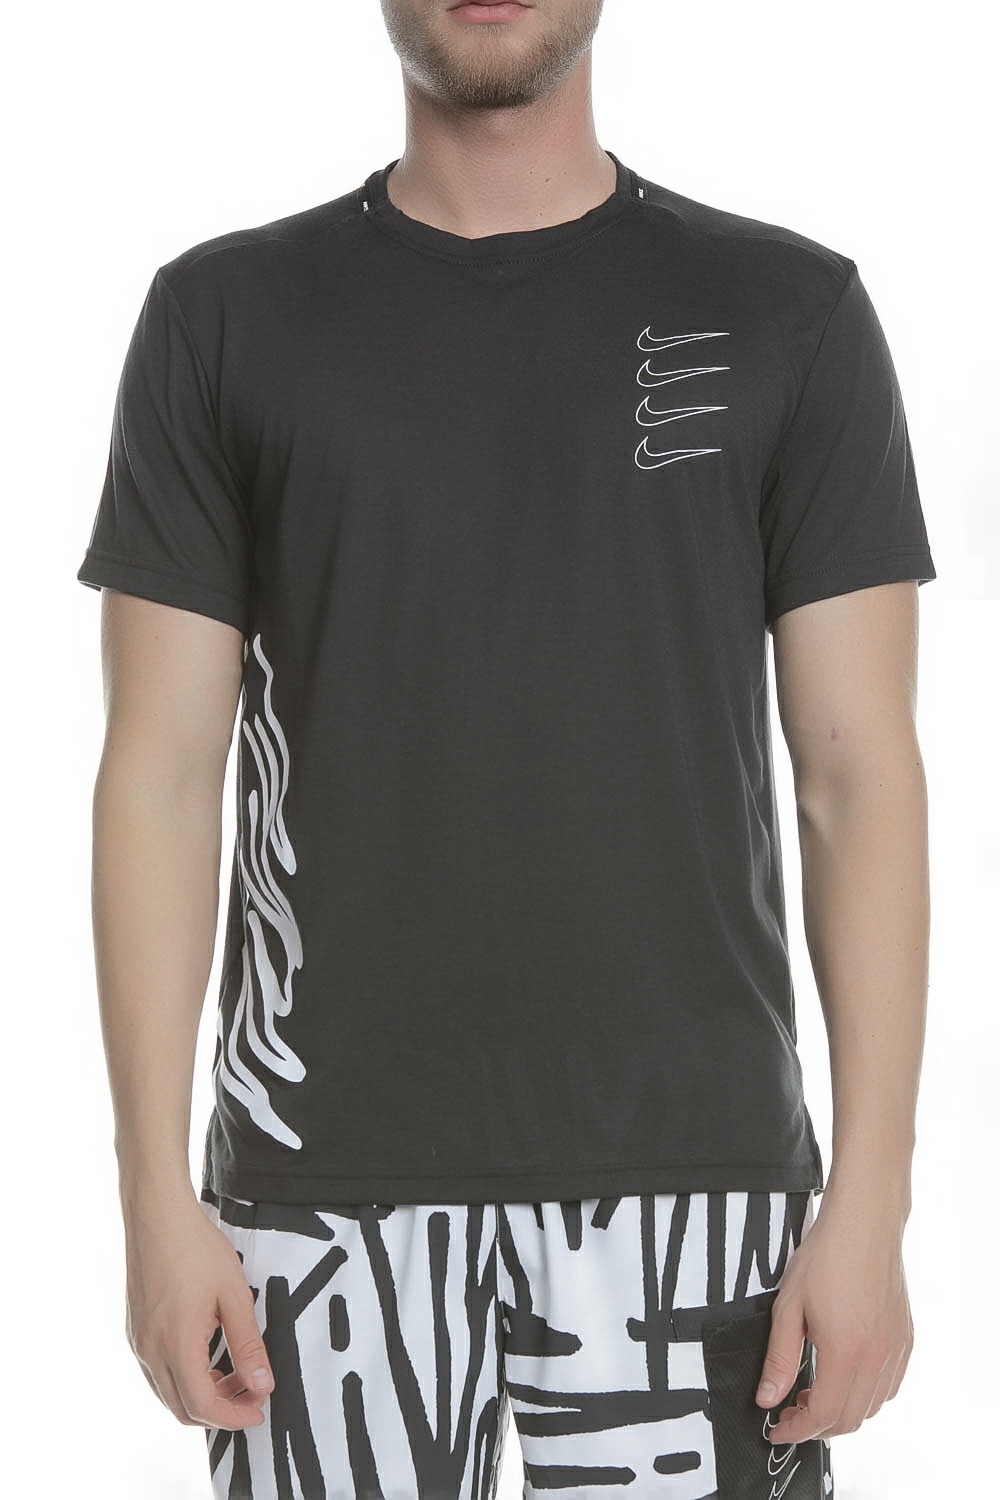 NIKE – Ανδρικη κοντομανικη μπλουζα προπονησης NIKE μαυρη